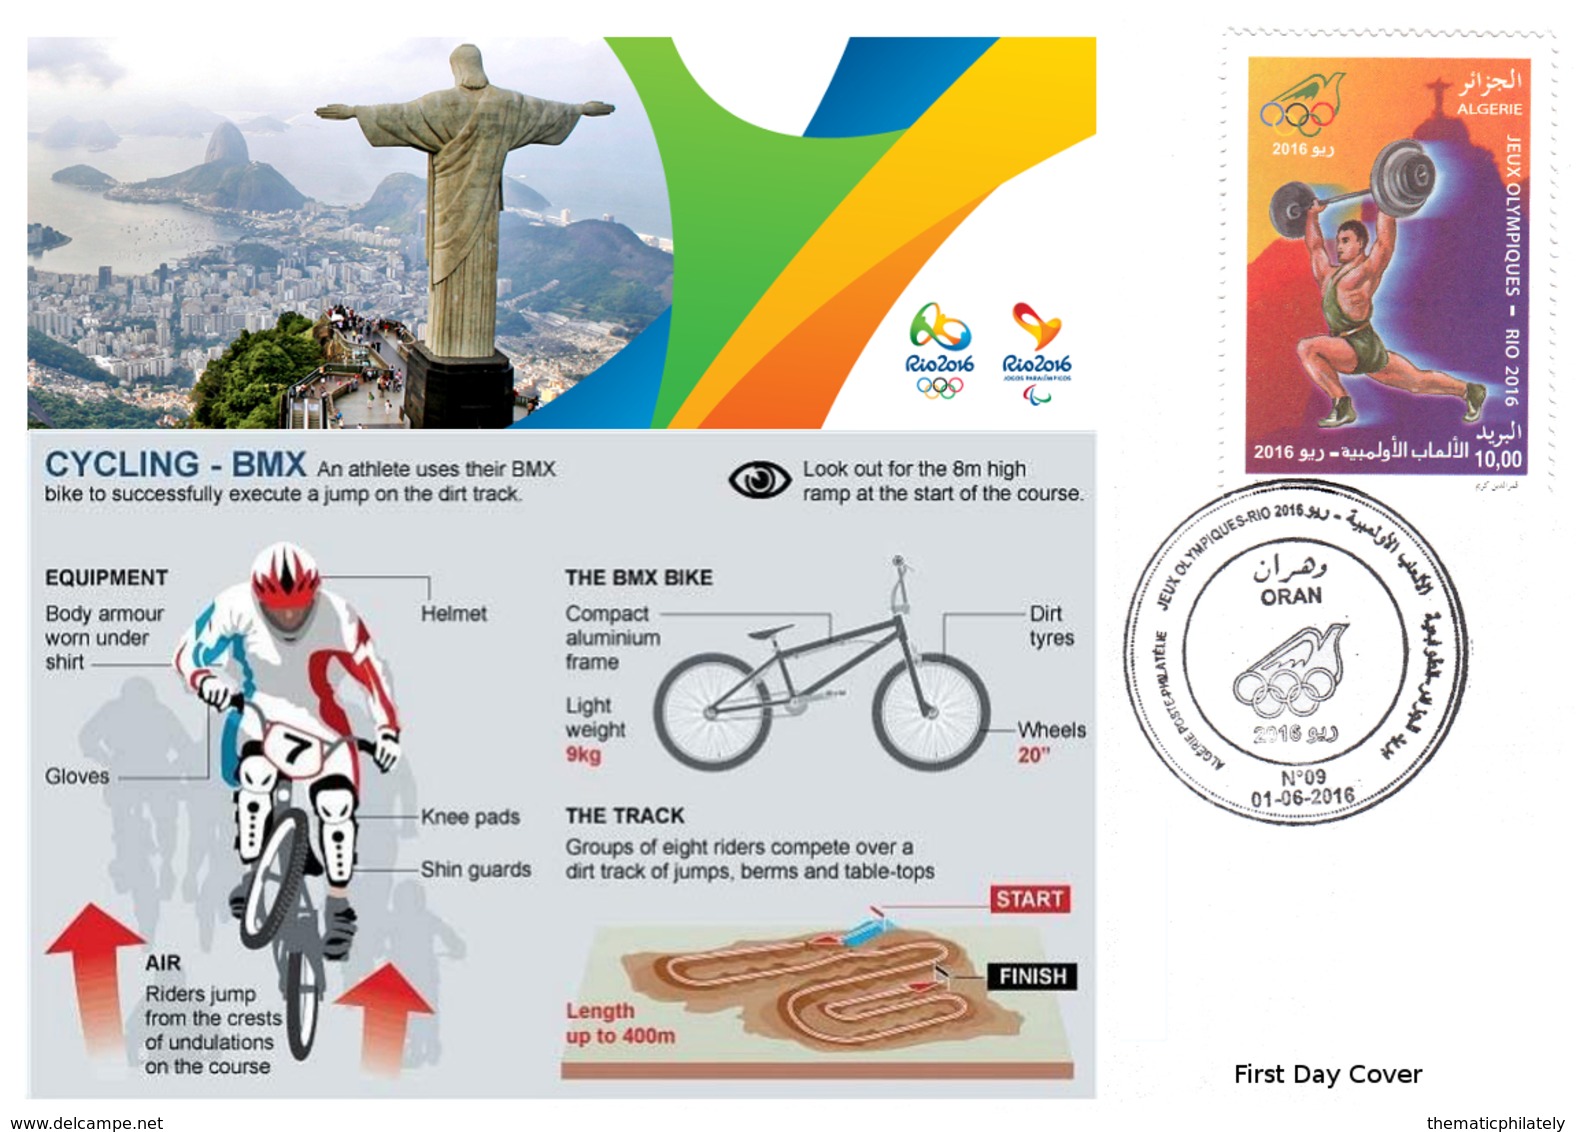 DZ Algeria 1747 Olympics Games Rio Brazil 2016 Jeux Olympiques Brésil Cycling Cyclisme Radfahren - Cycling